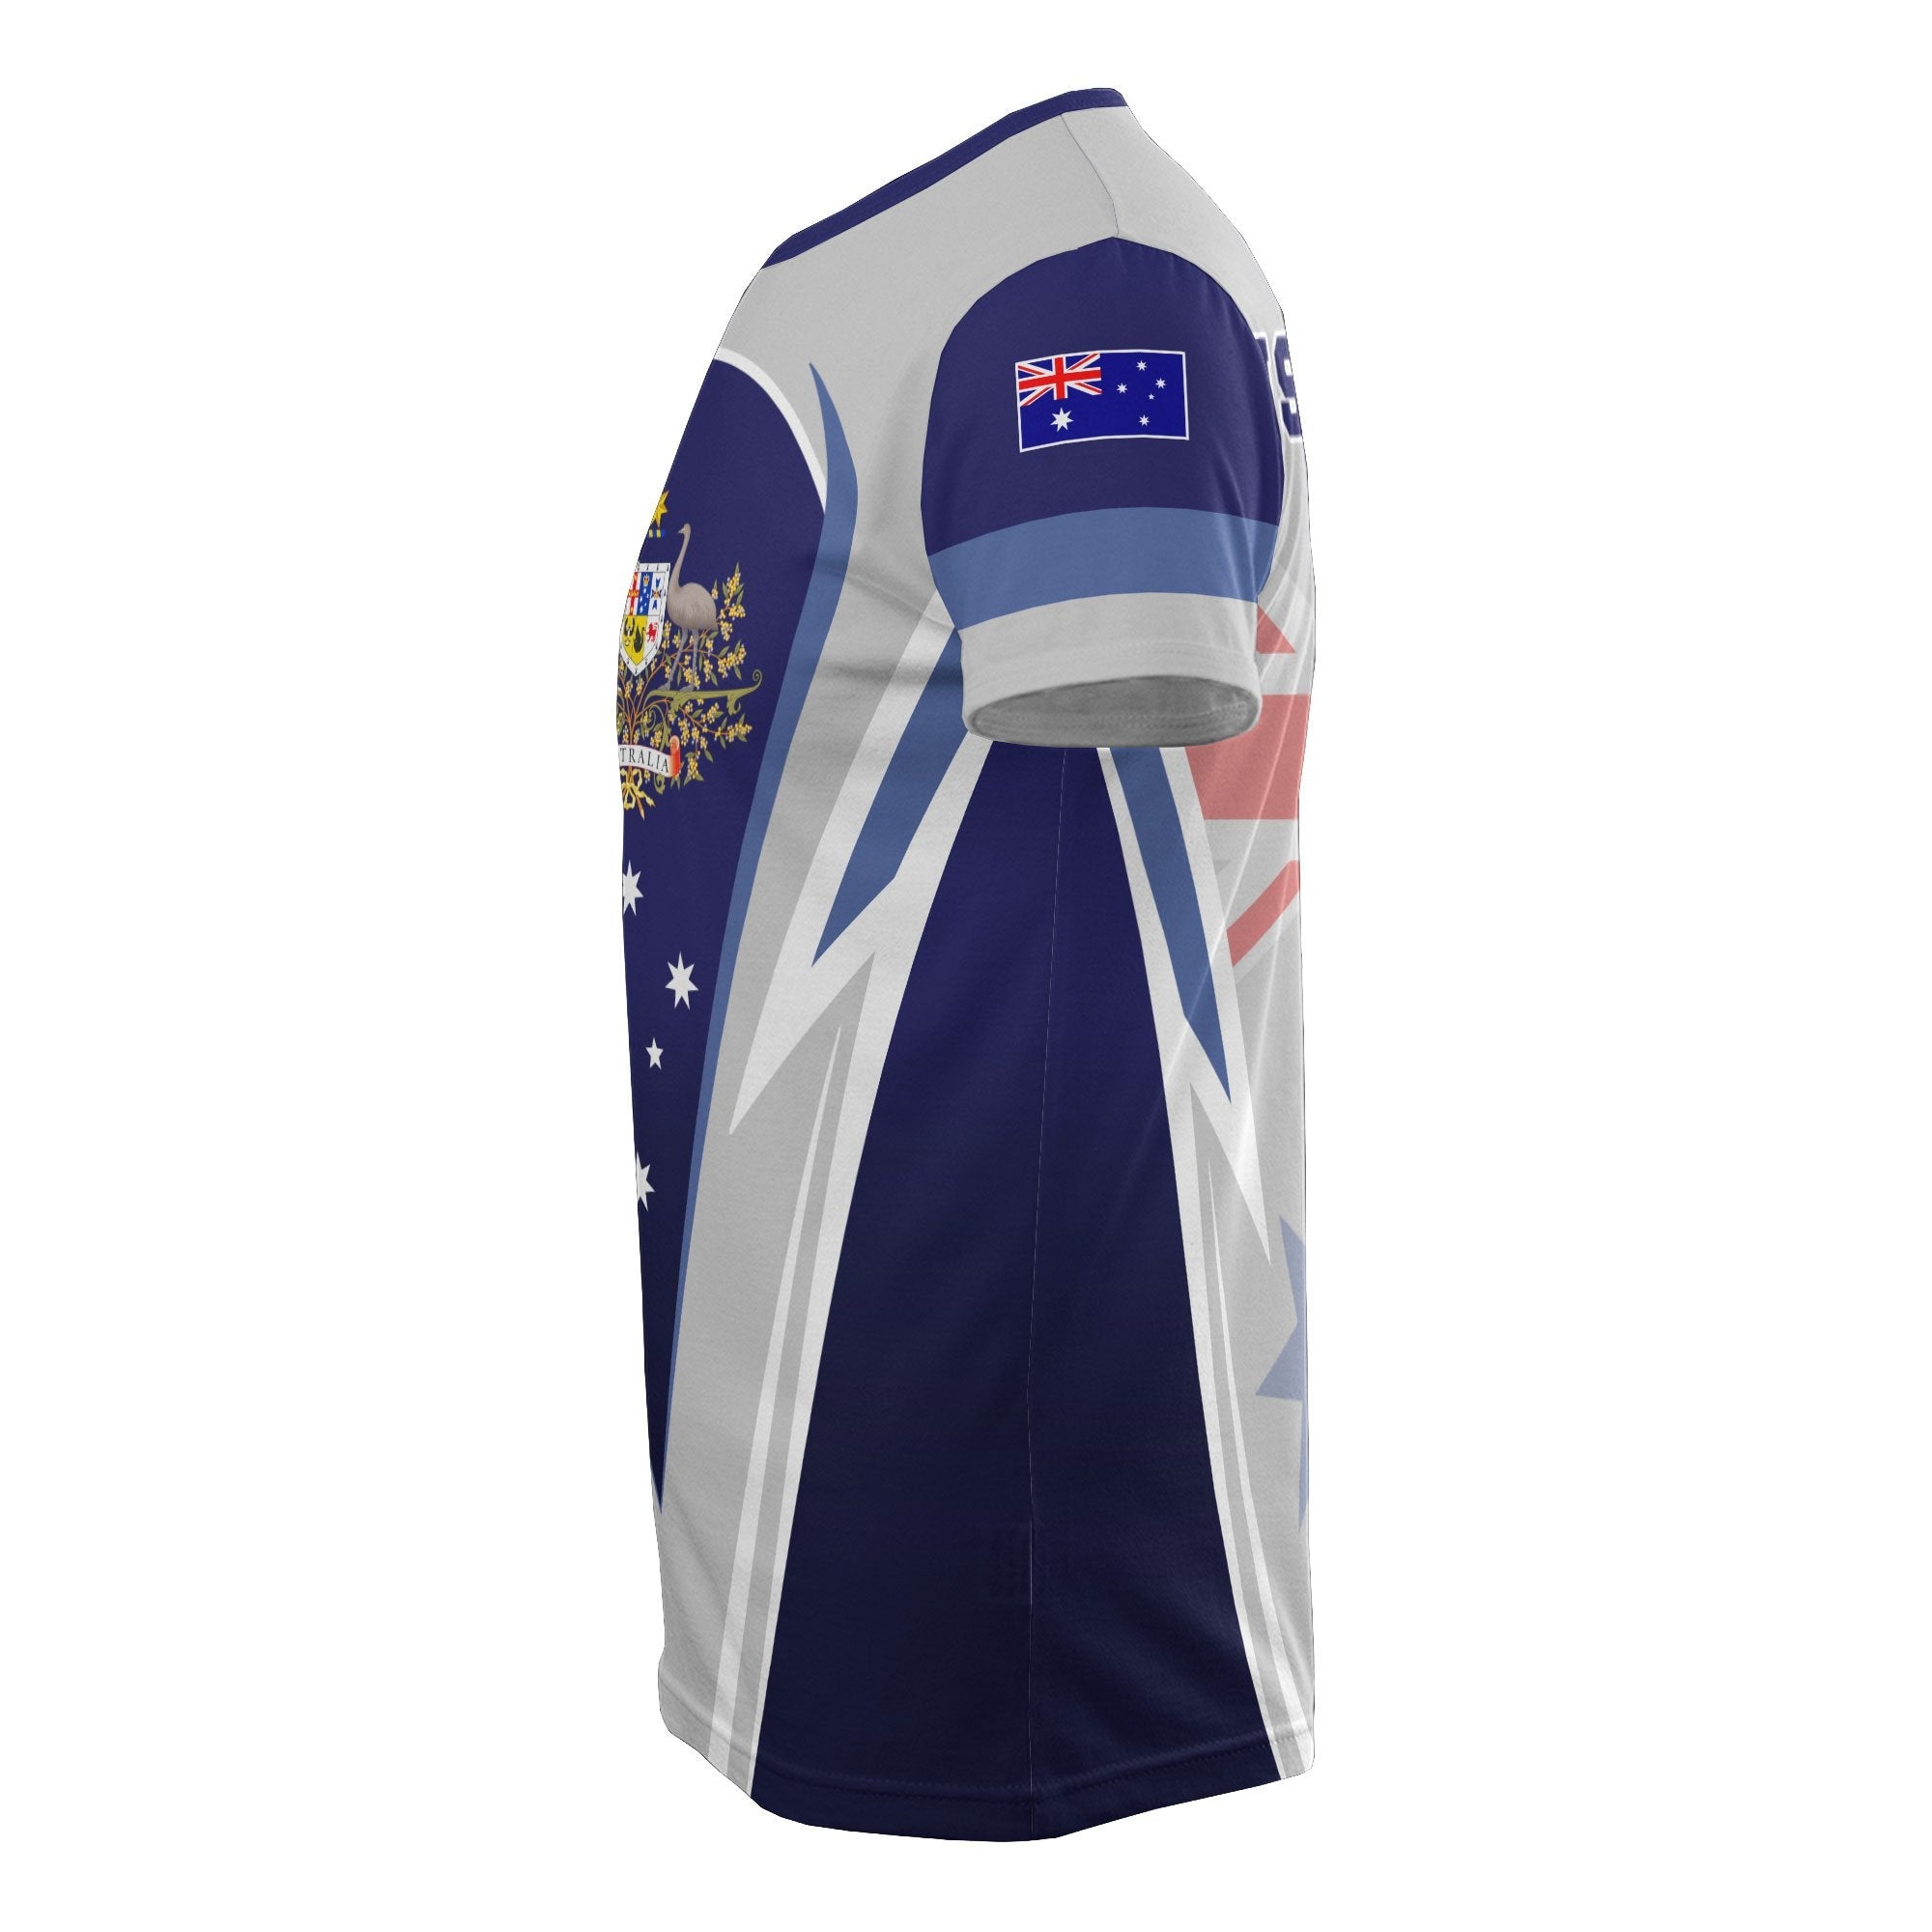 t-shirt-australian-coat-of-arms-t-shirts-flag-national-color-unisex